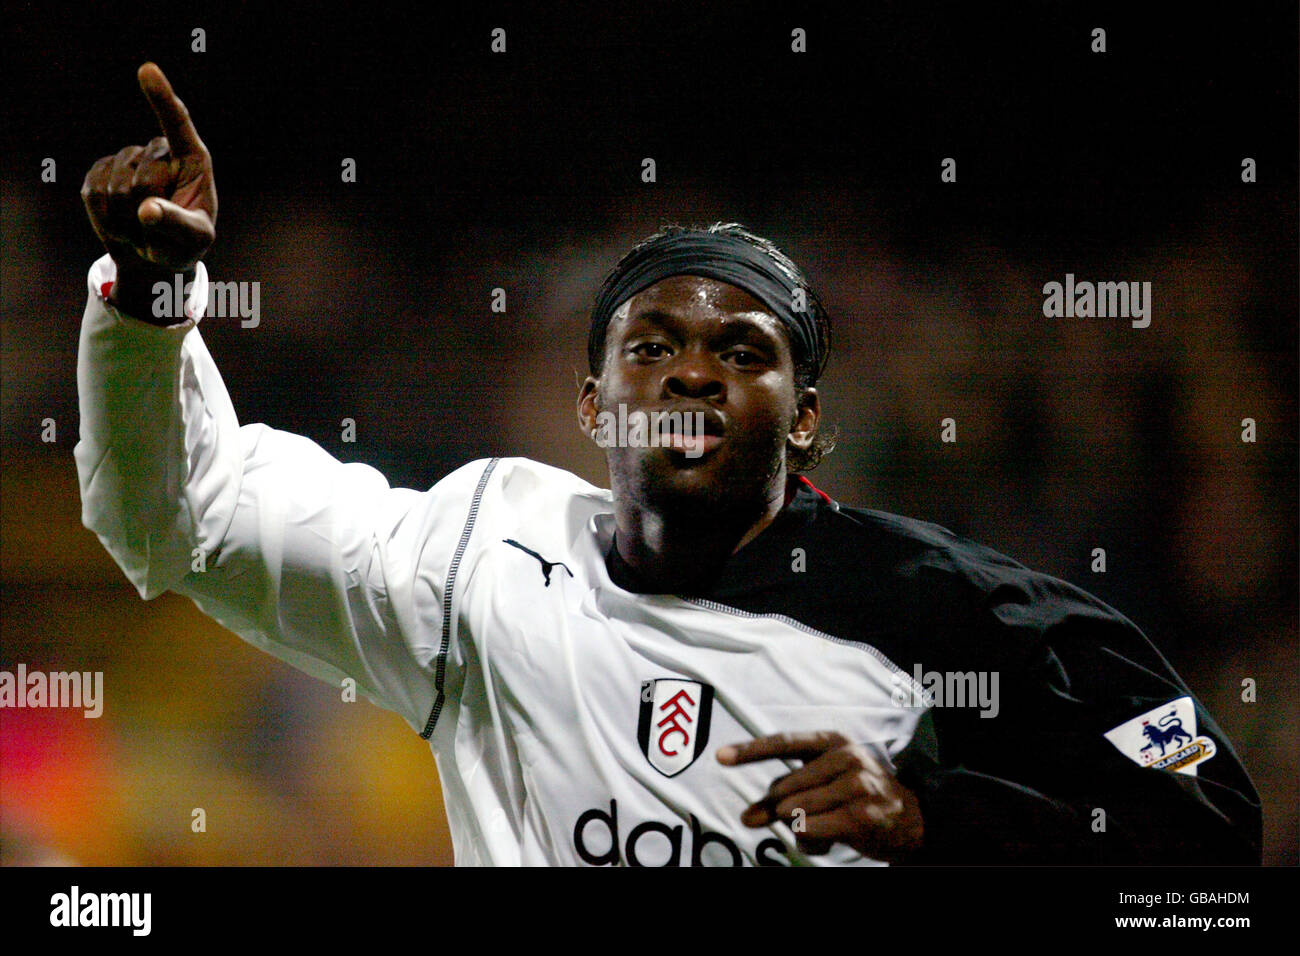 Fútbol - Premiership de FA Barclaycard - Fulham v Portsmouth. Louis Saha de Fulham celebra su 2 o gol Foto de stock